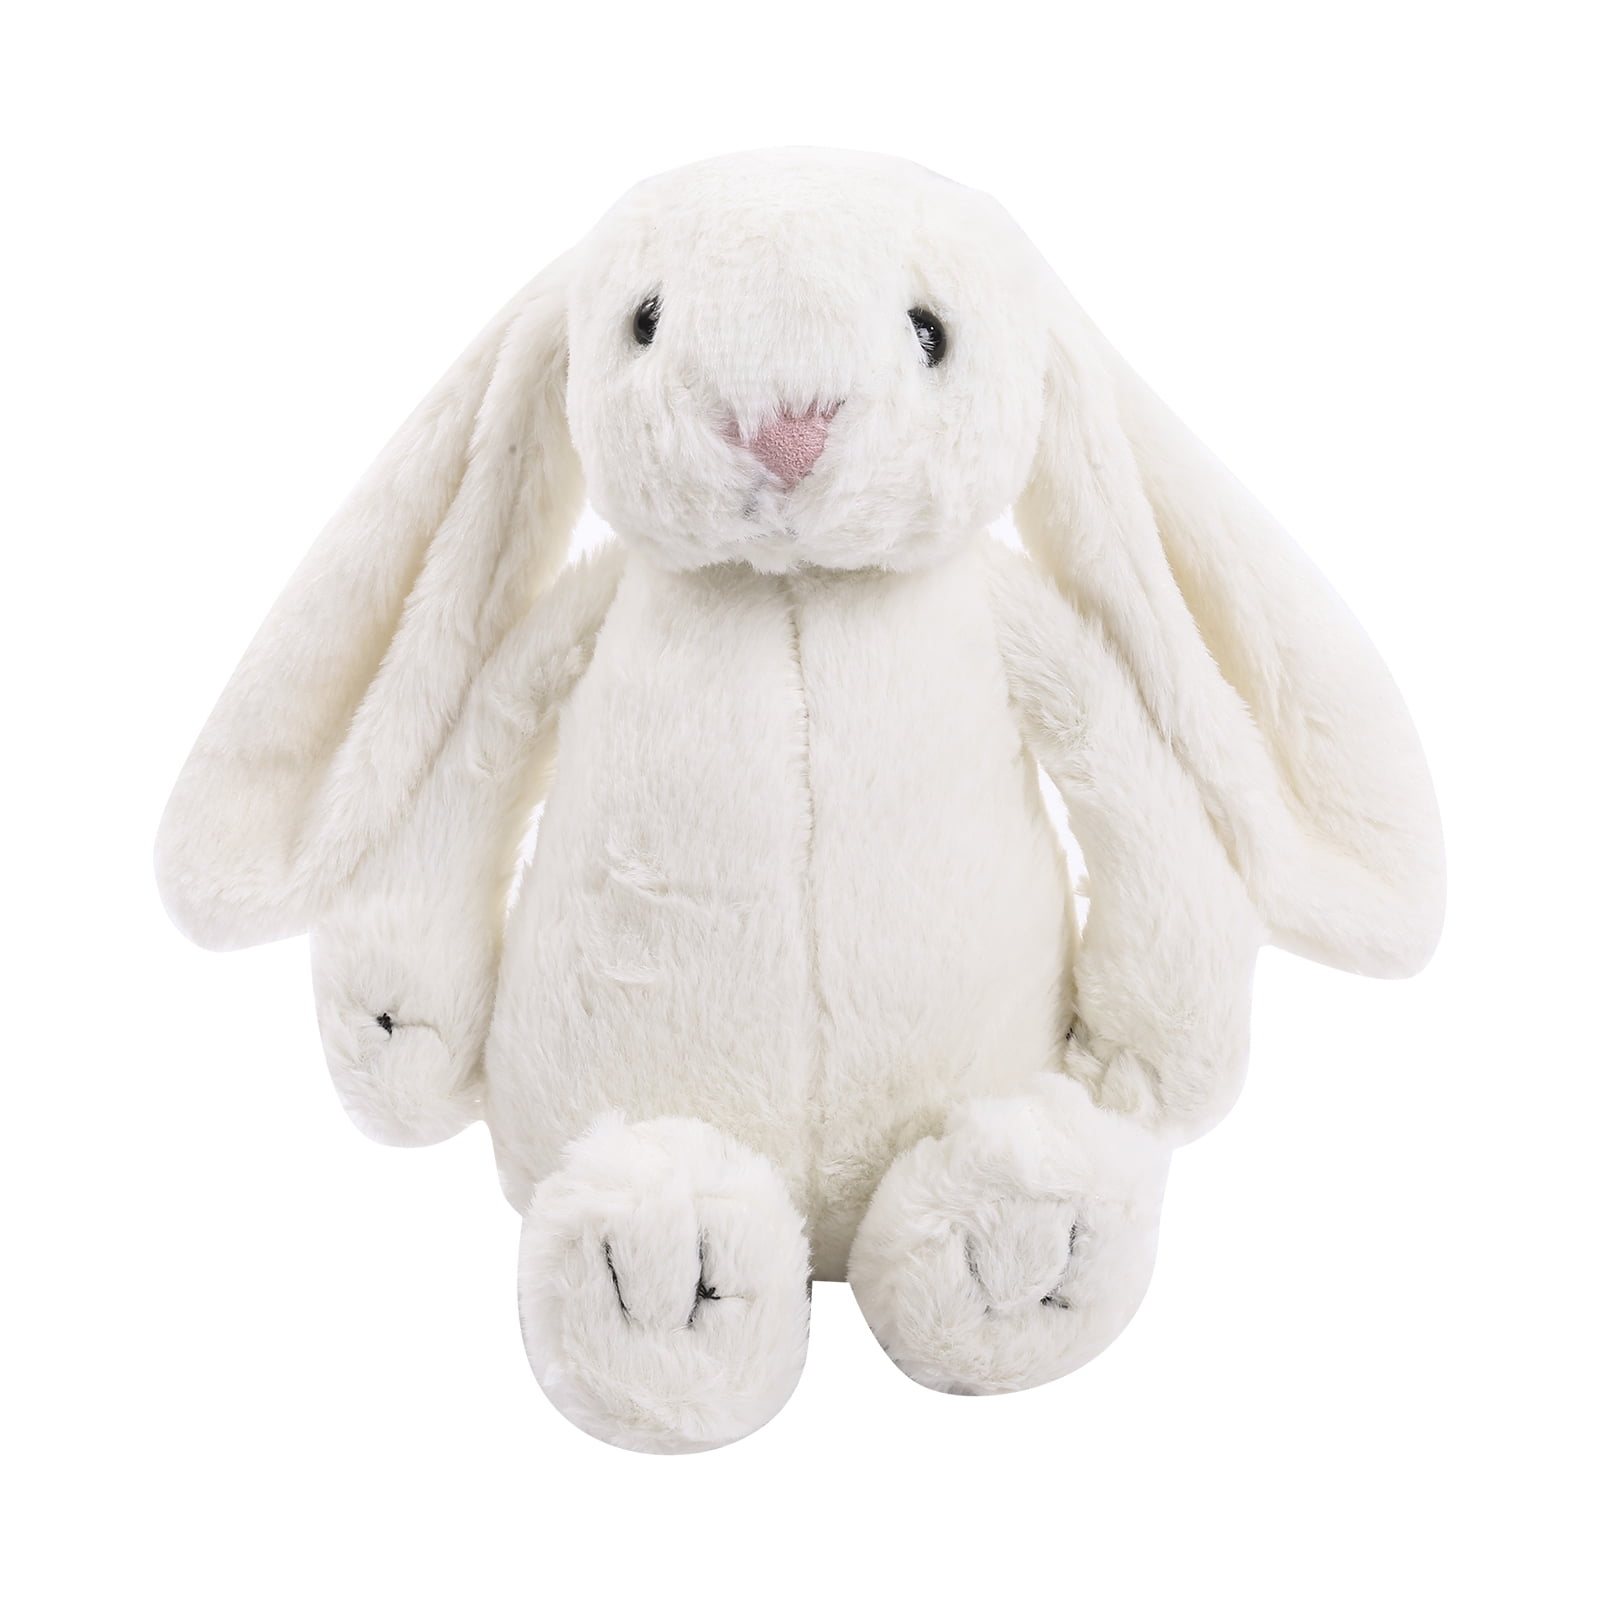 Stuffed White Easter Lamb w/ Cross Shaped Card & White Bunny Set w/BLUE Nose 